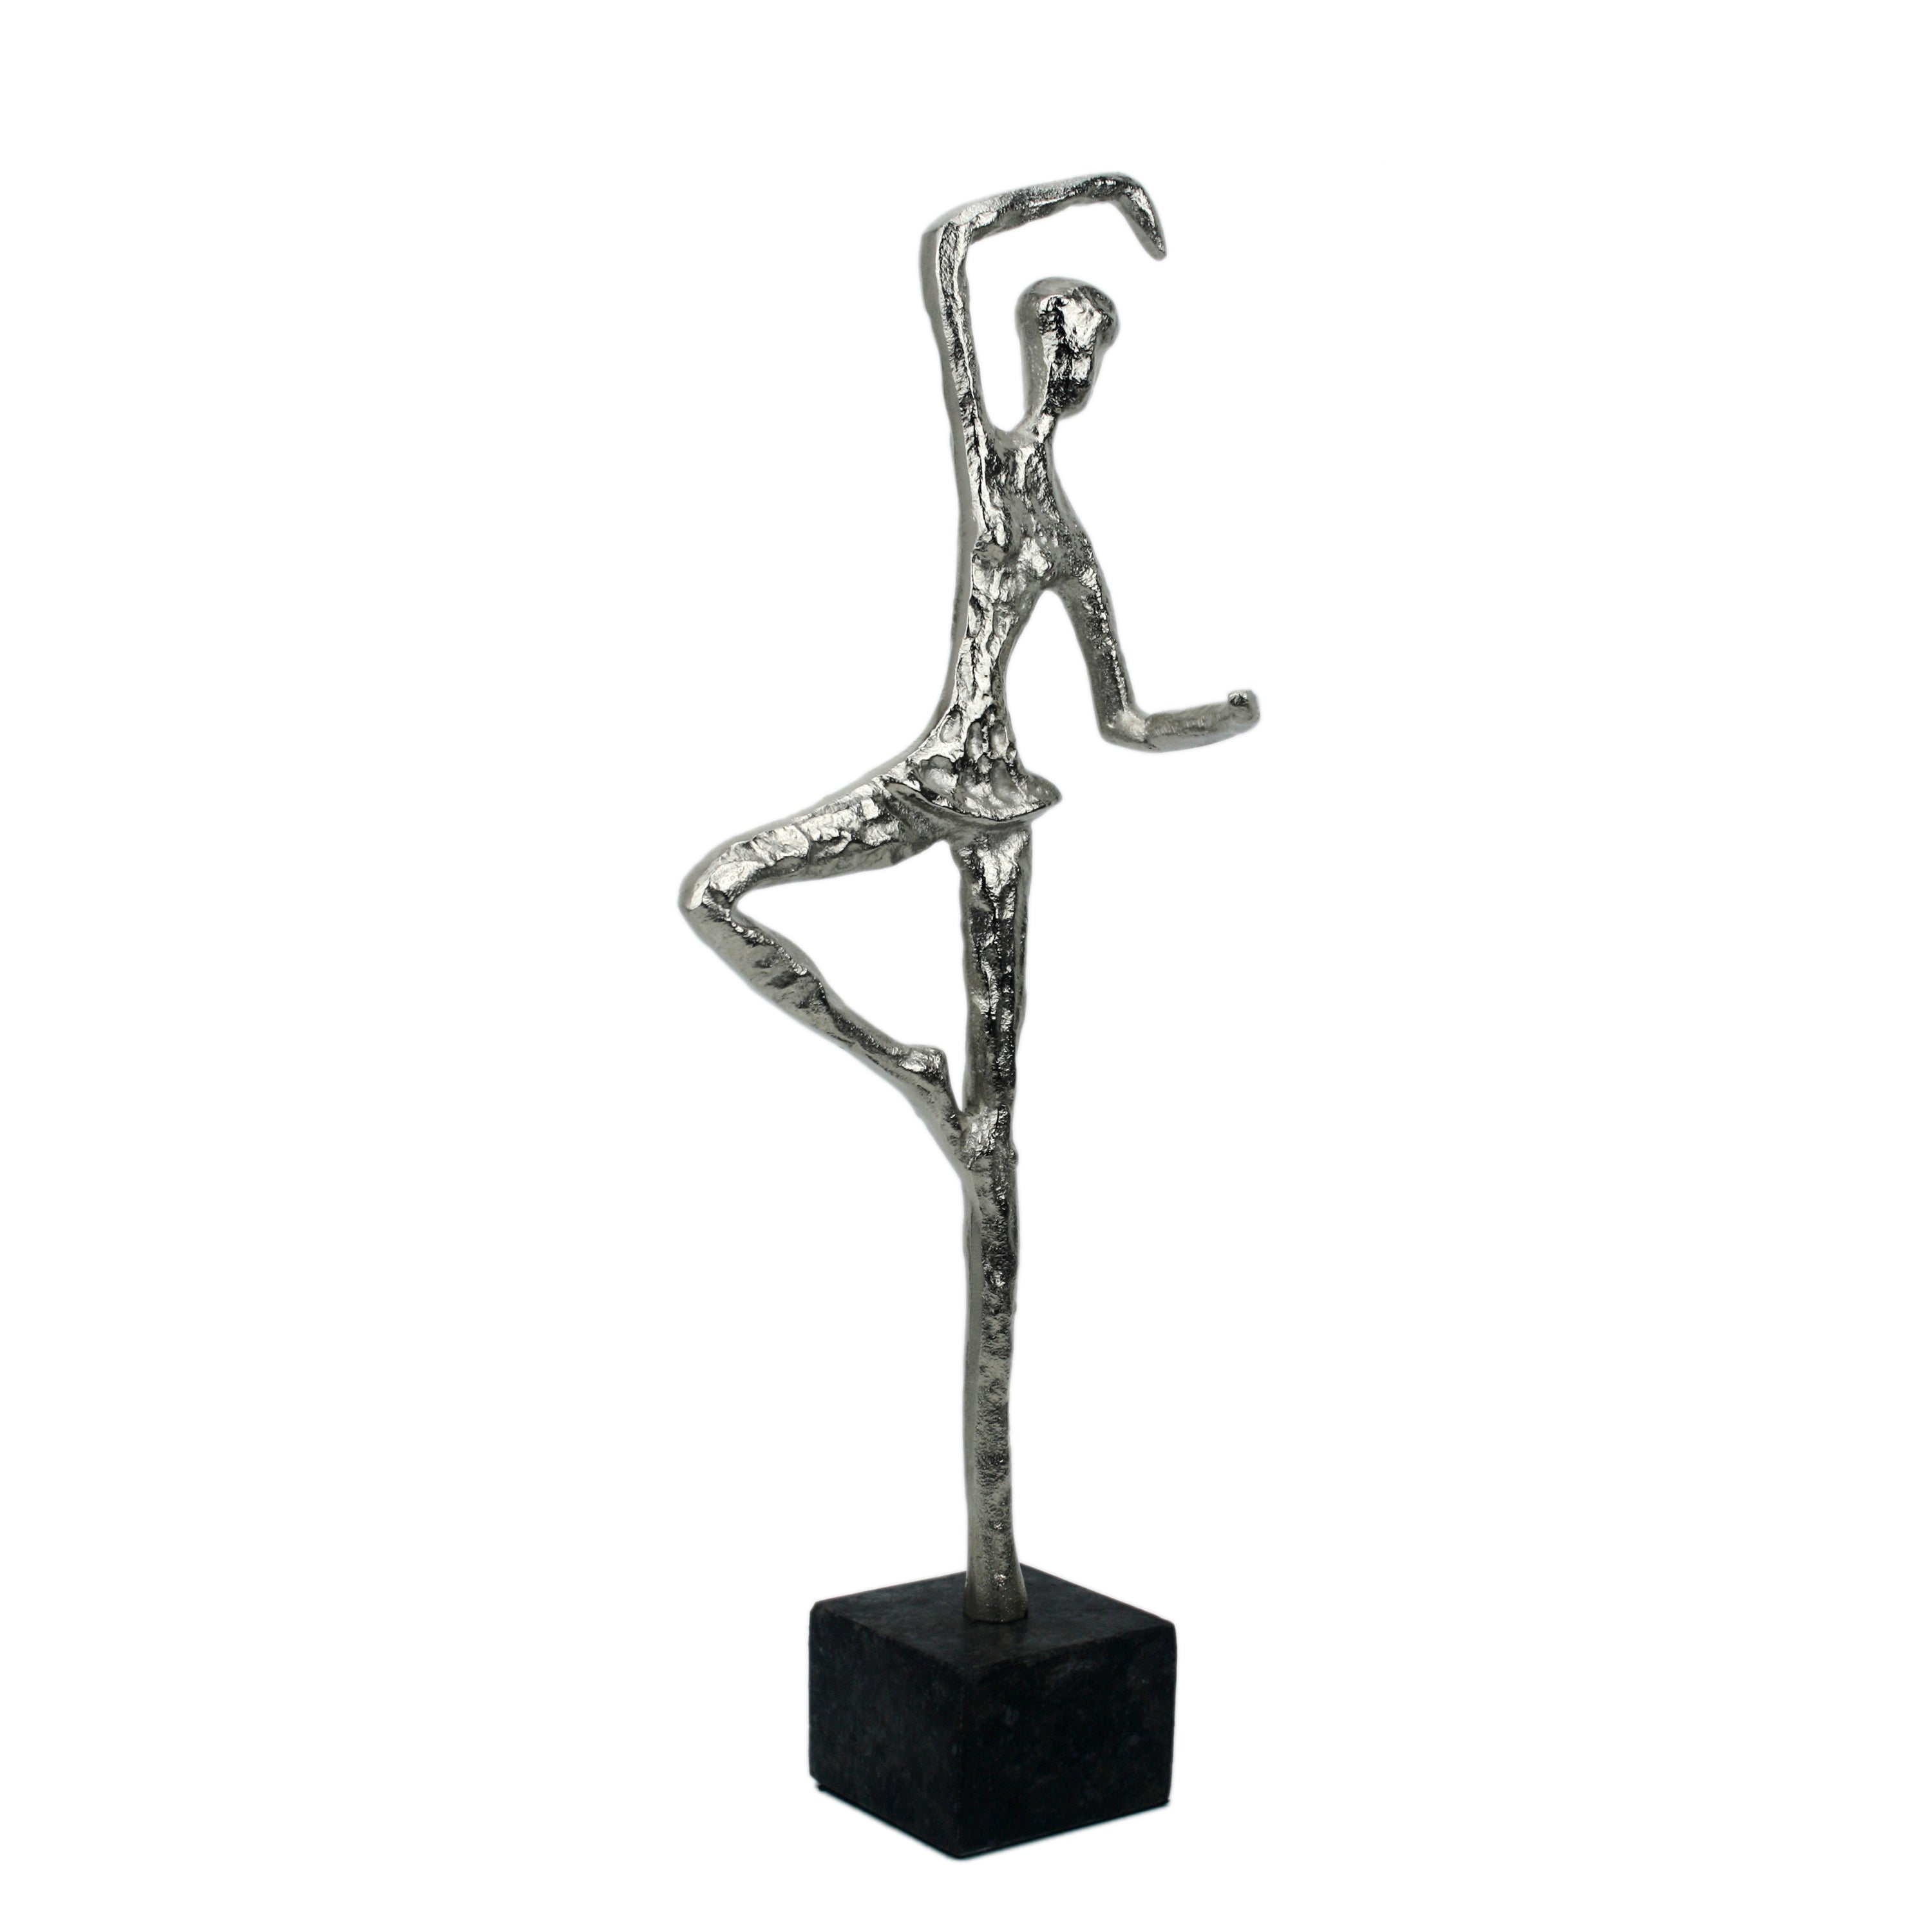 Balletic Silver Lady Sculpture